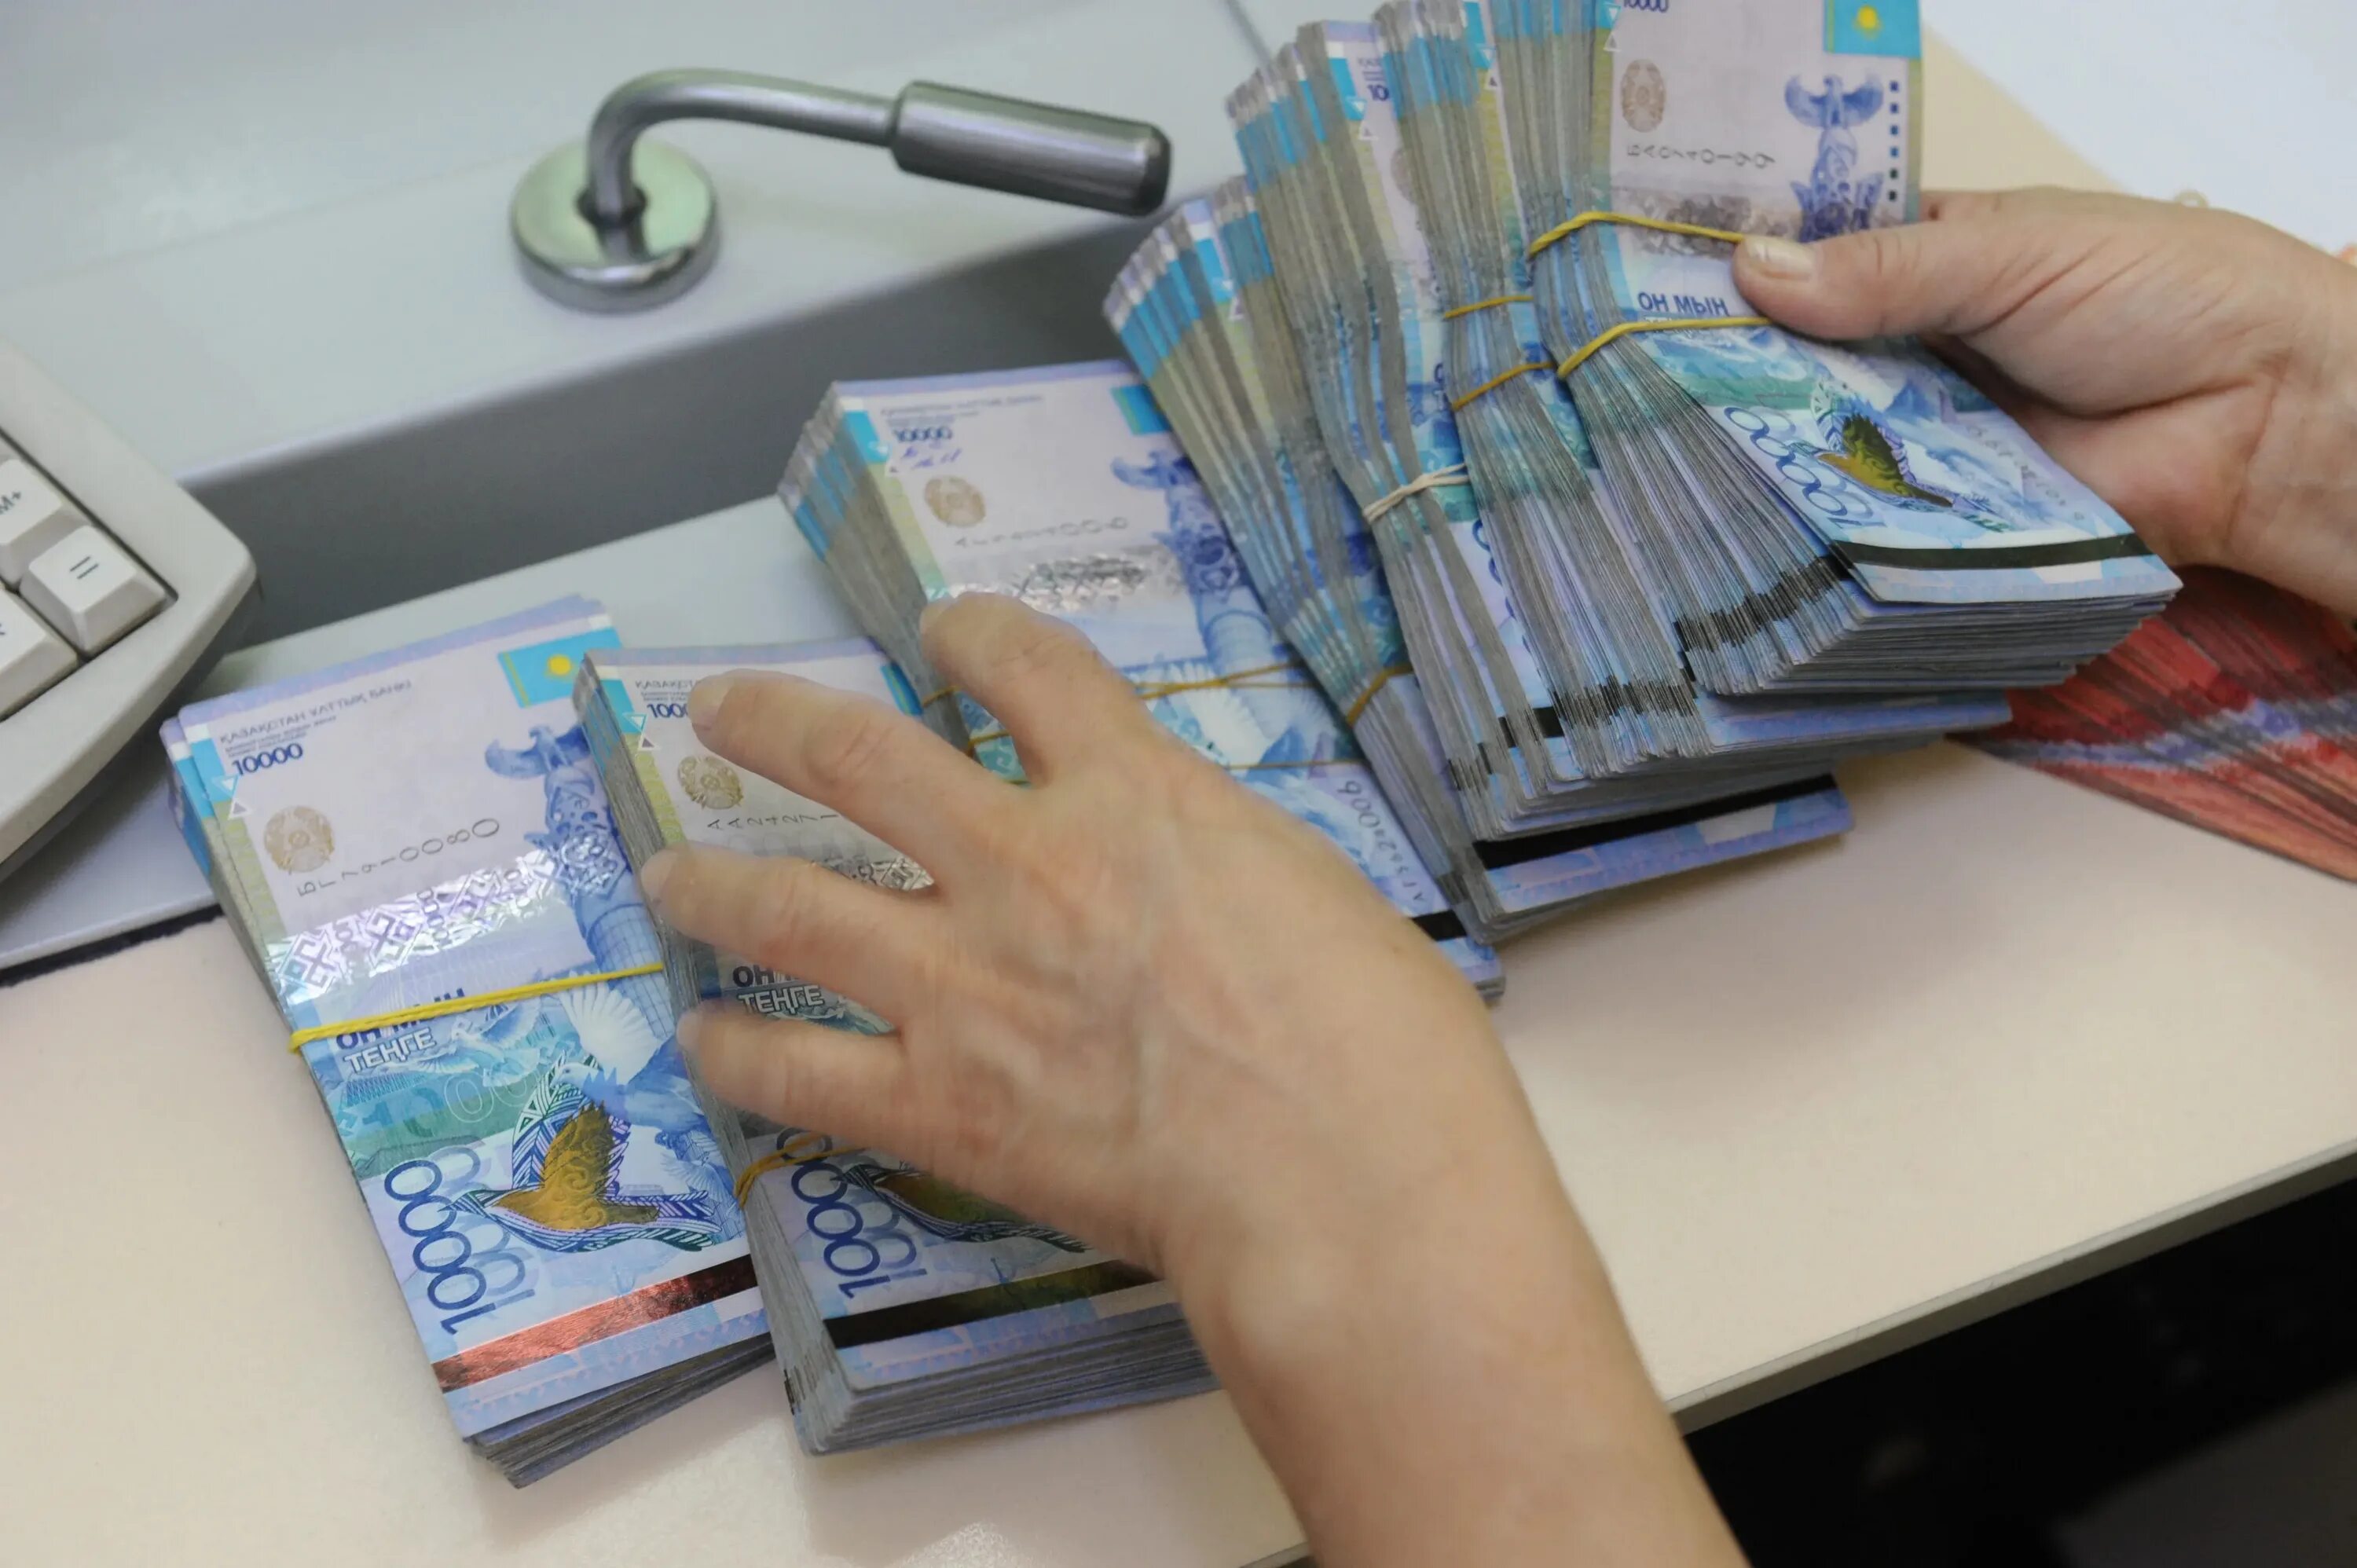 Деньги тенге. Пачки денег тенге. Деньги Казахстана в руках. Деньги Казахстана пачками.